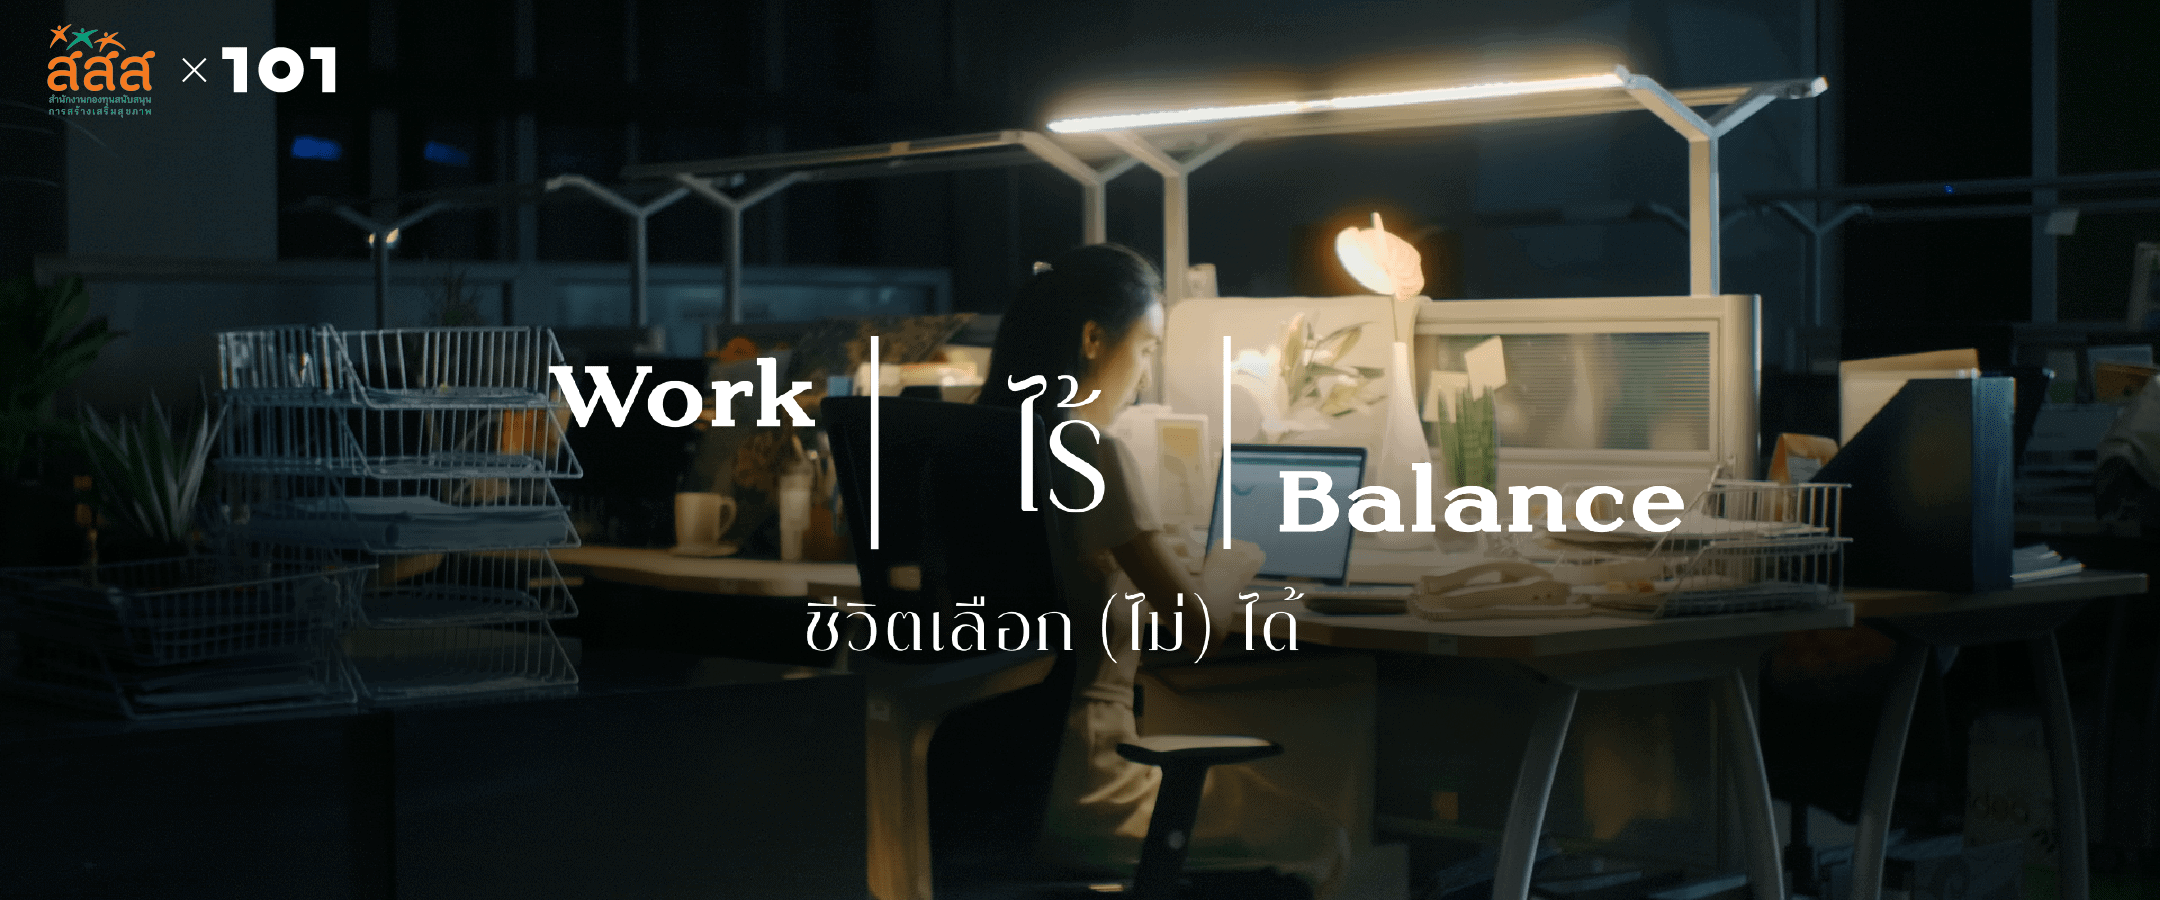 Work – ไร้ - Balance : ชีวิตเลือก(ไม่)ได้